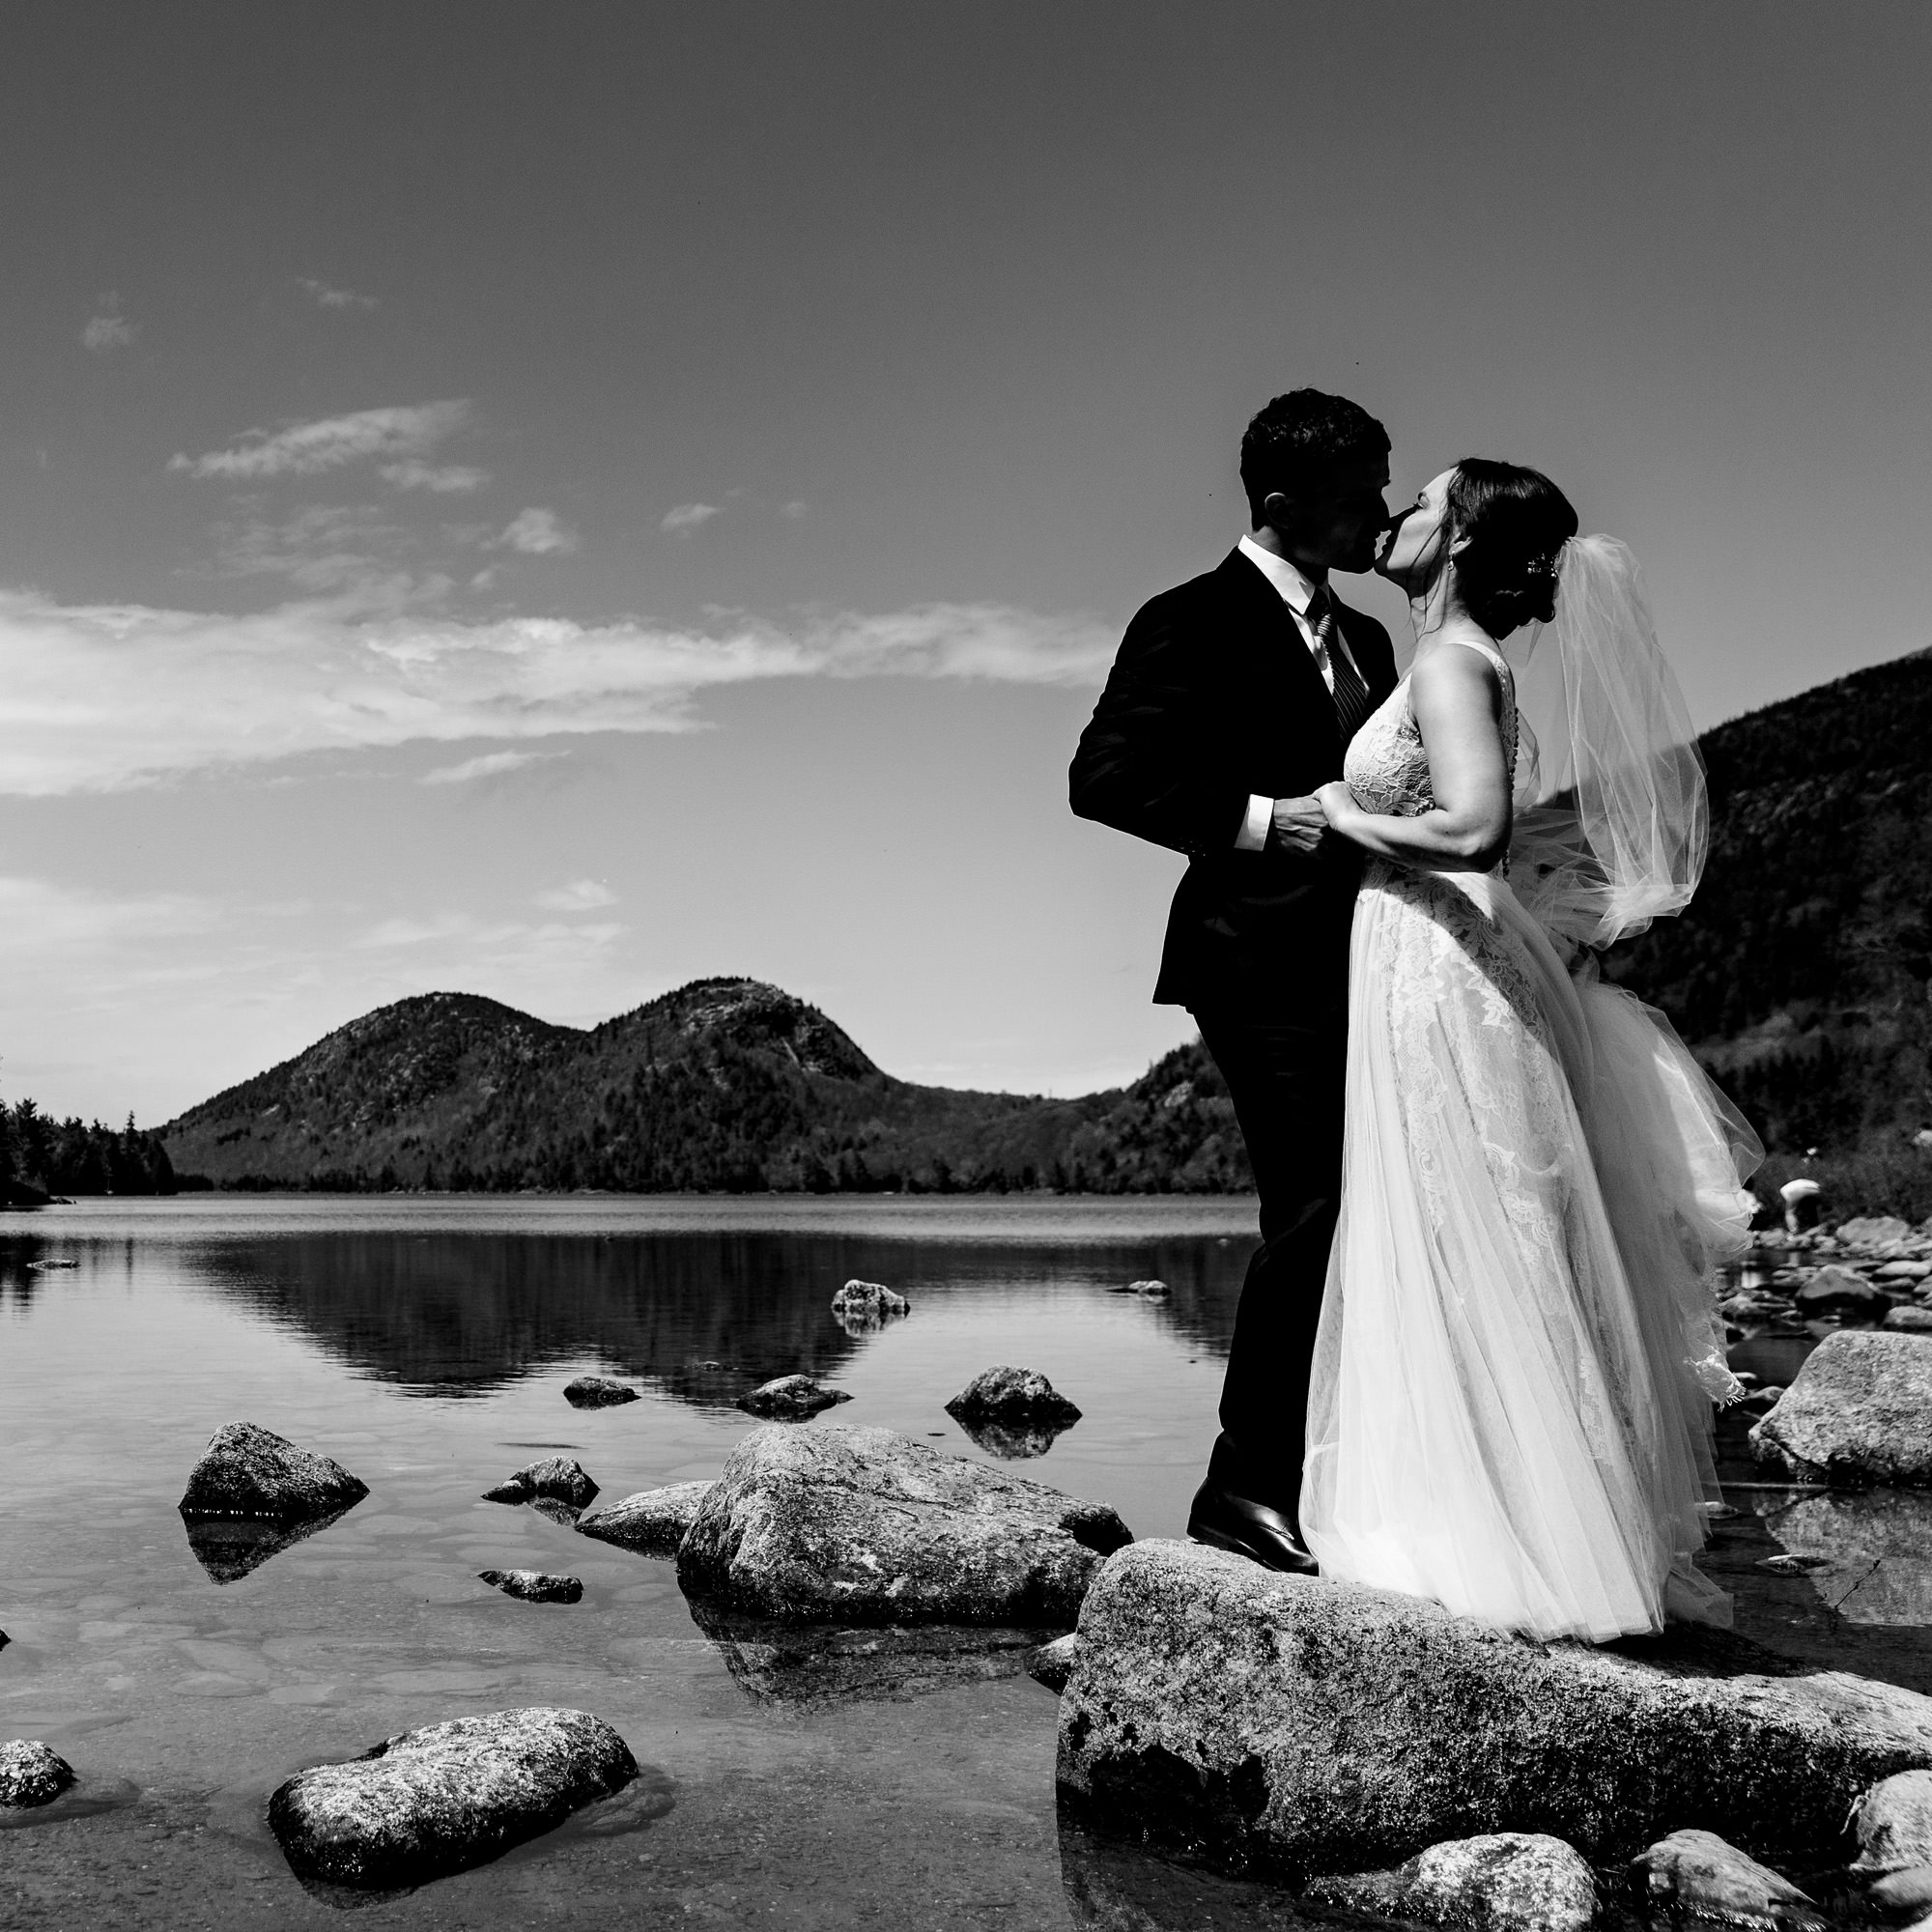 A wedding portrait in front of Jordan Pond in Acadia National Park